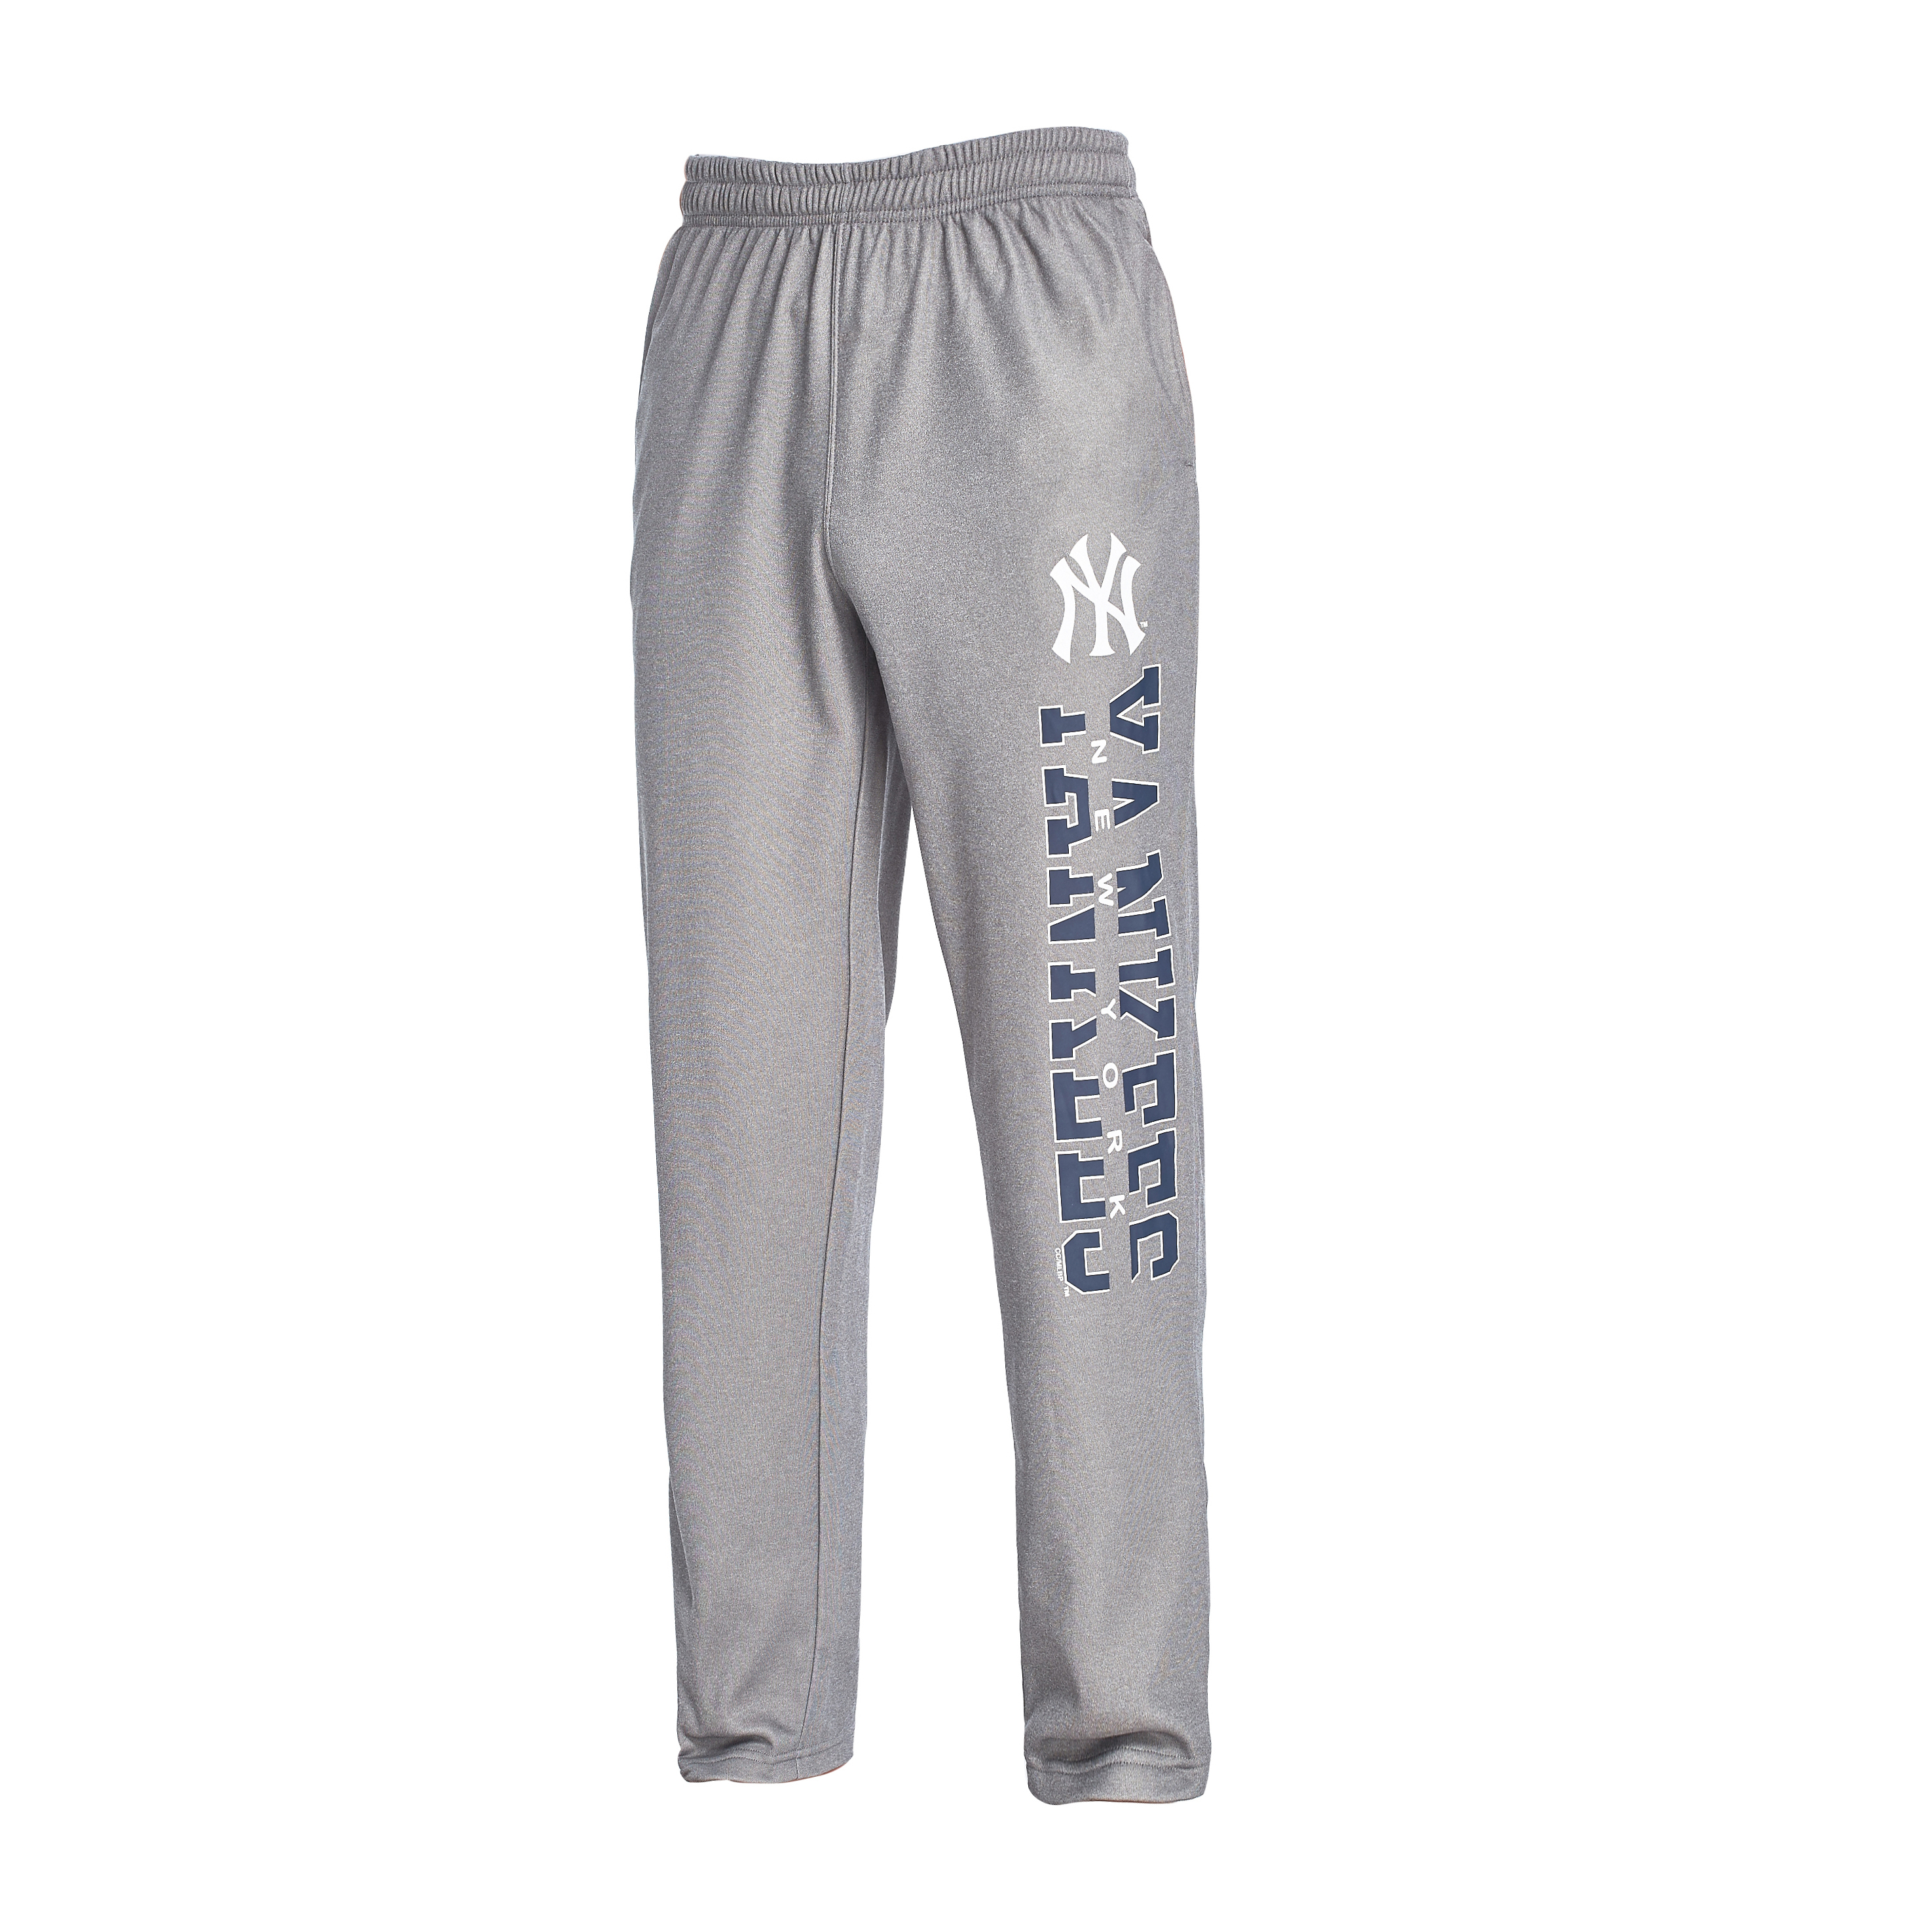 MLB Men’s Graphic Fleece Lounge Pants - New York Yankees